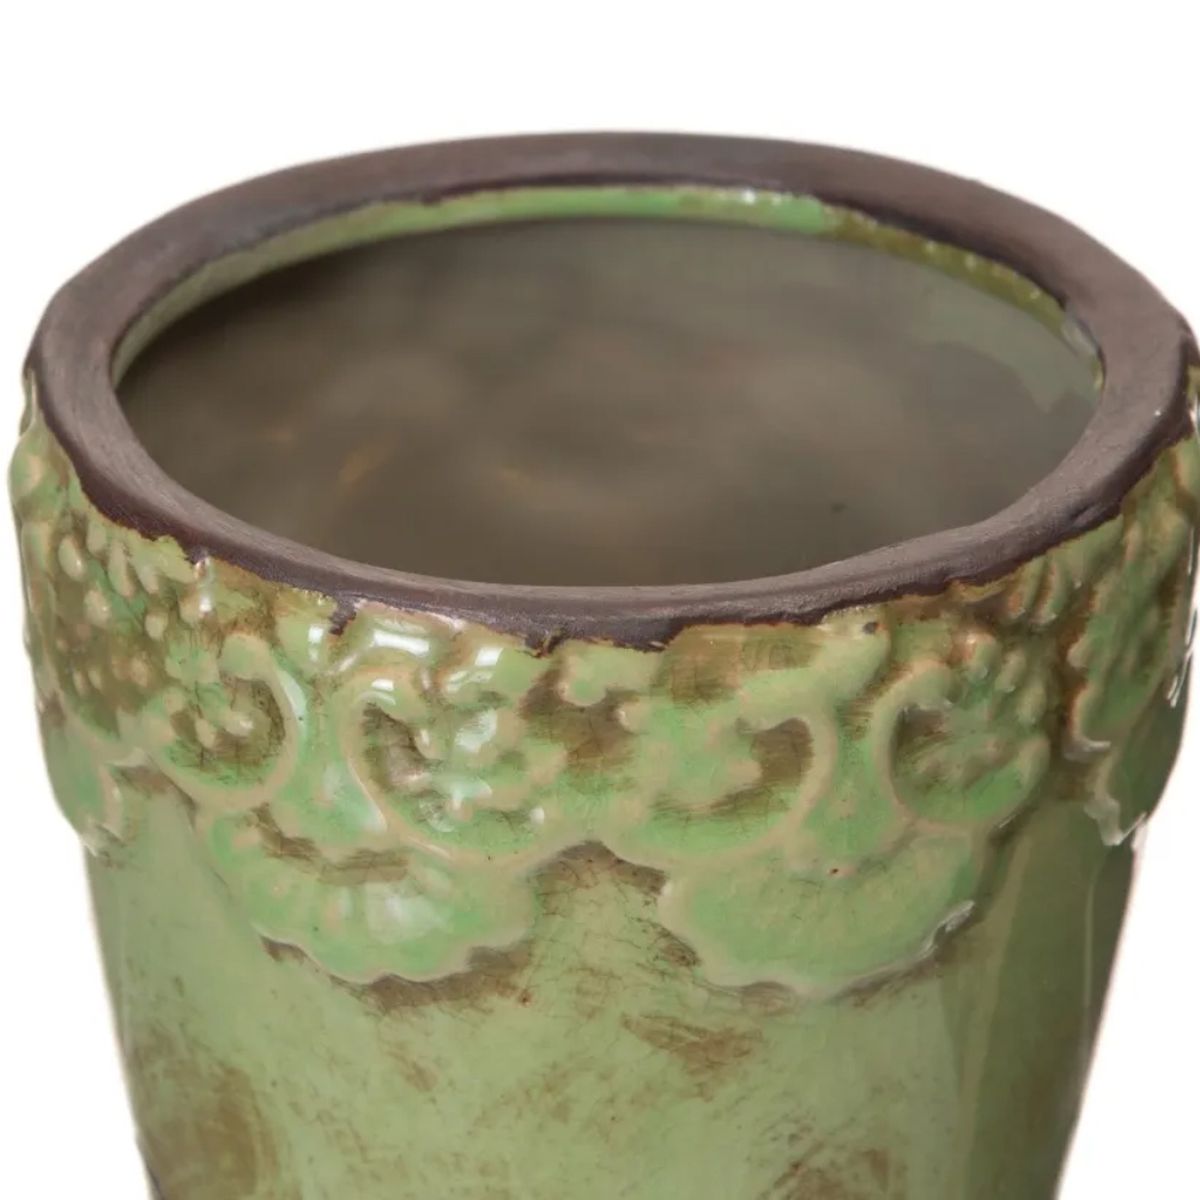 Flower pot in aged ceramic - Green